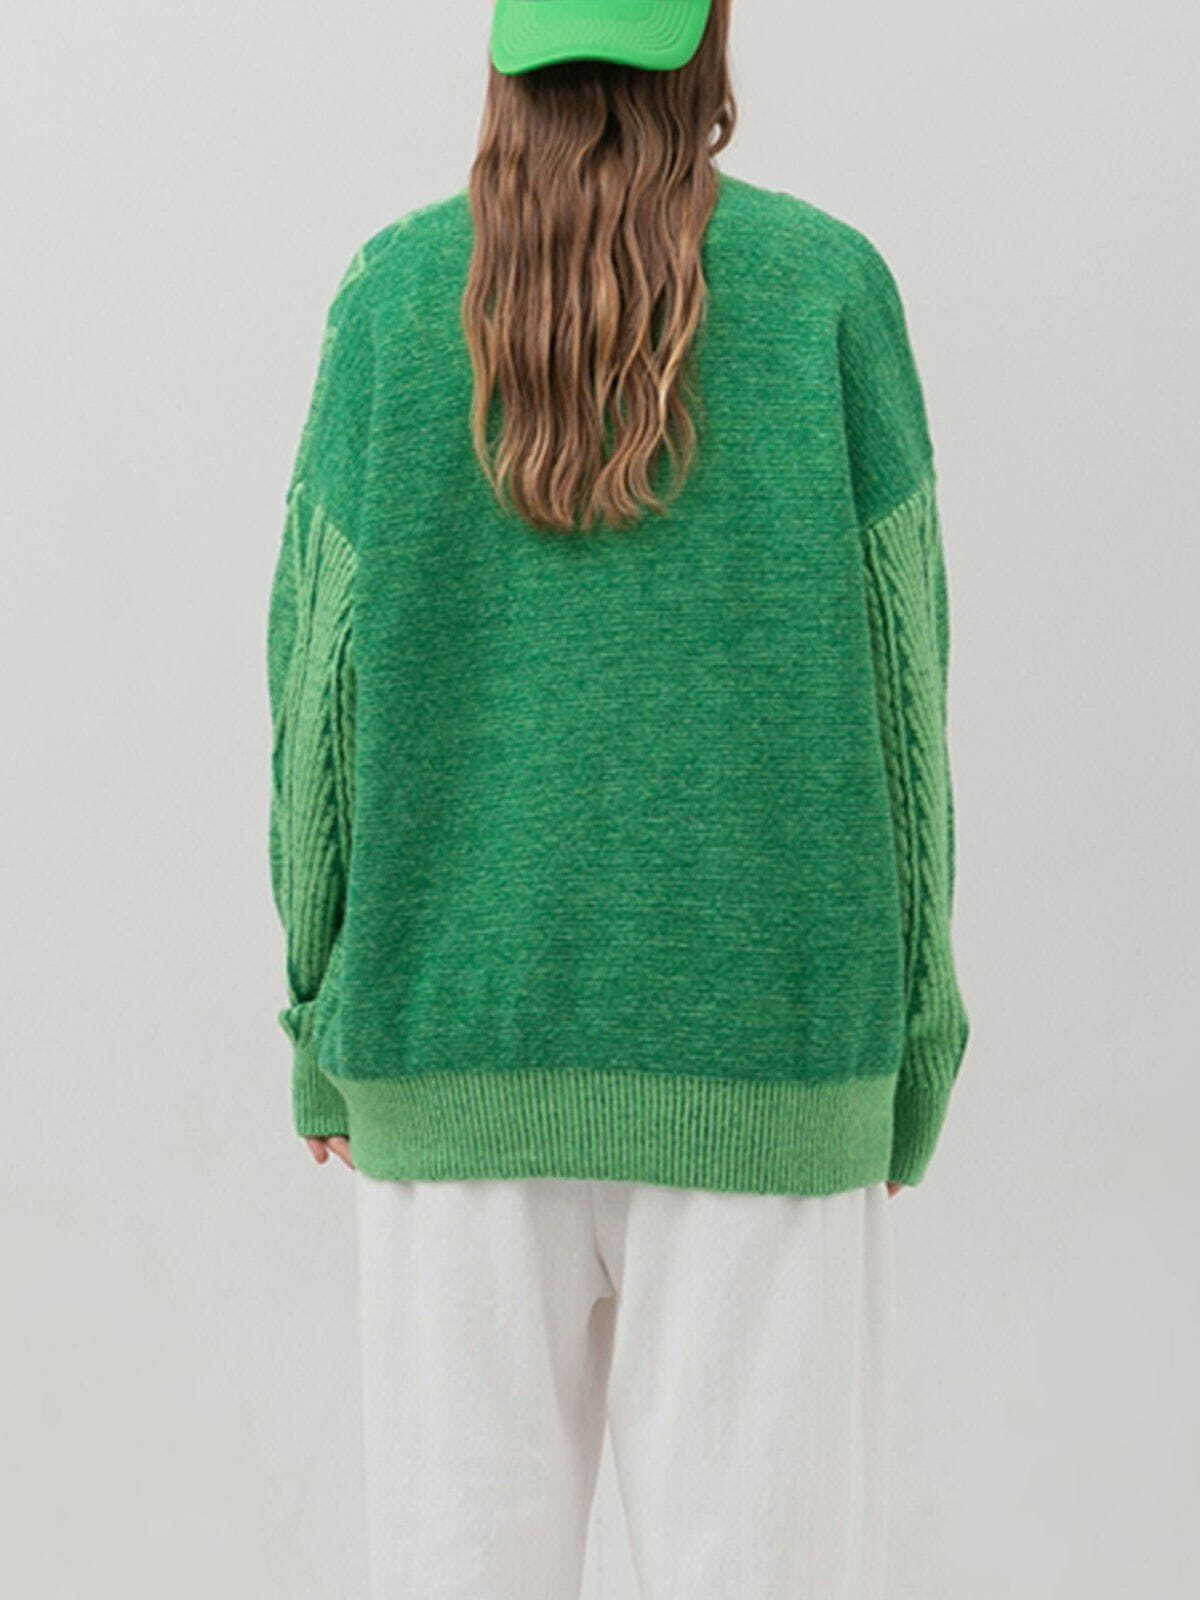 knit rhombus sweater retro & edgy urban fashion 5900